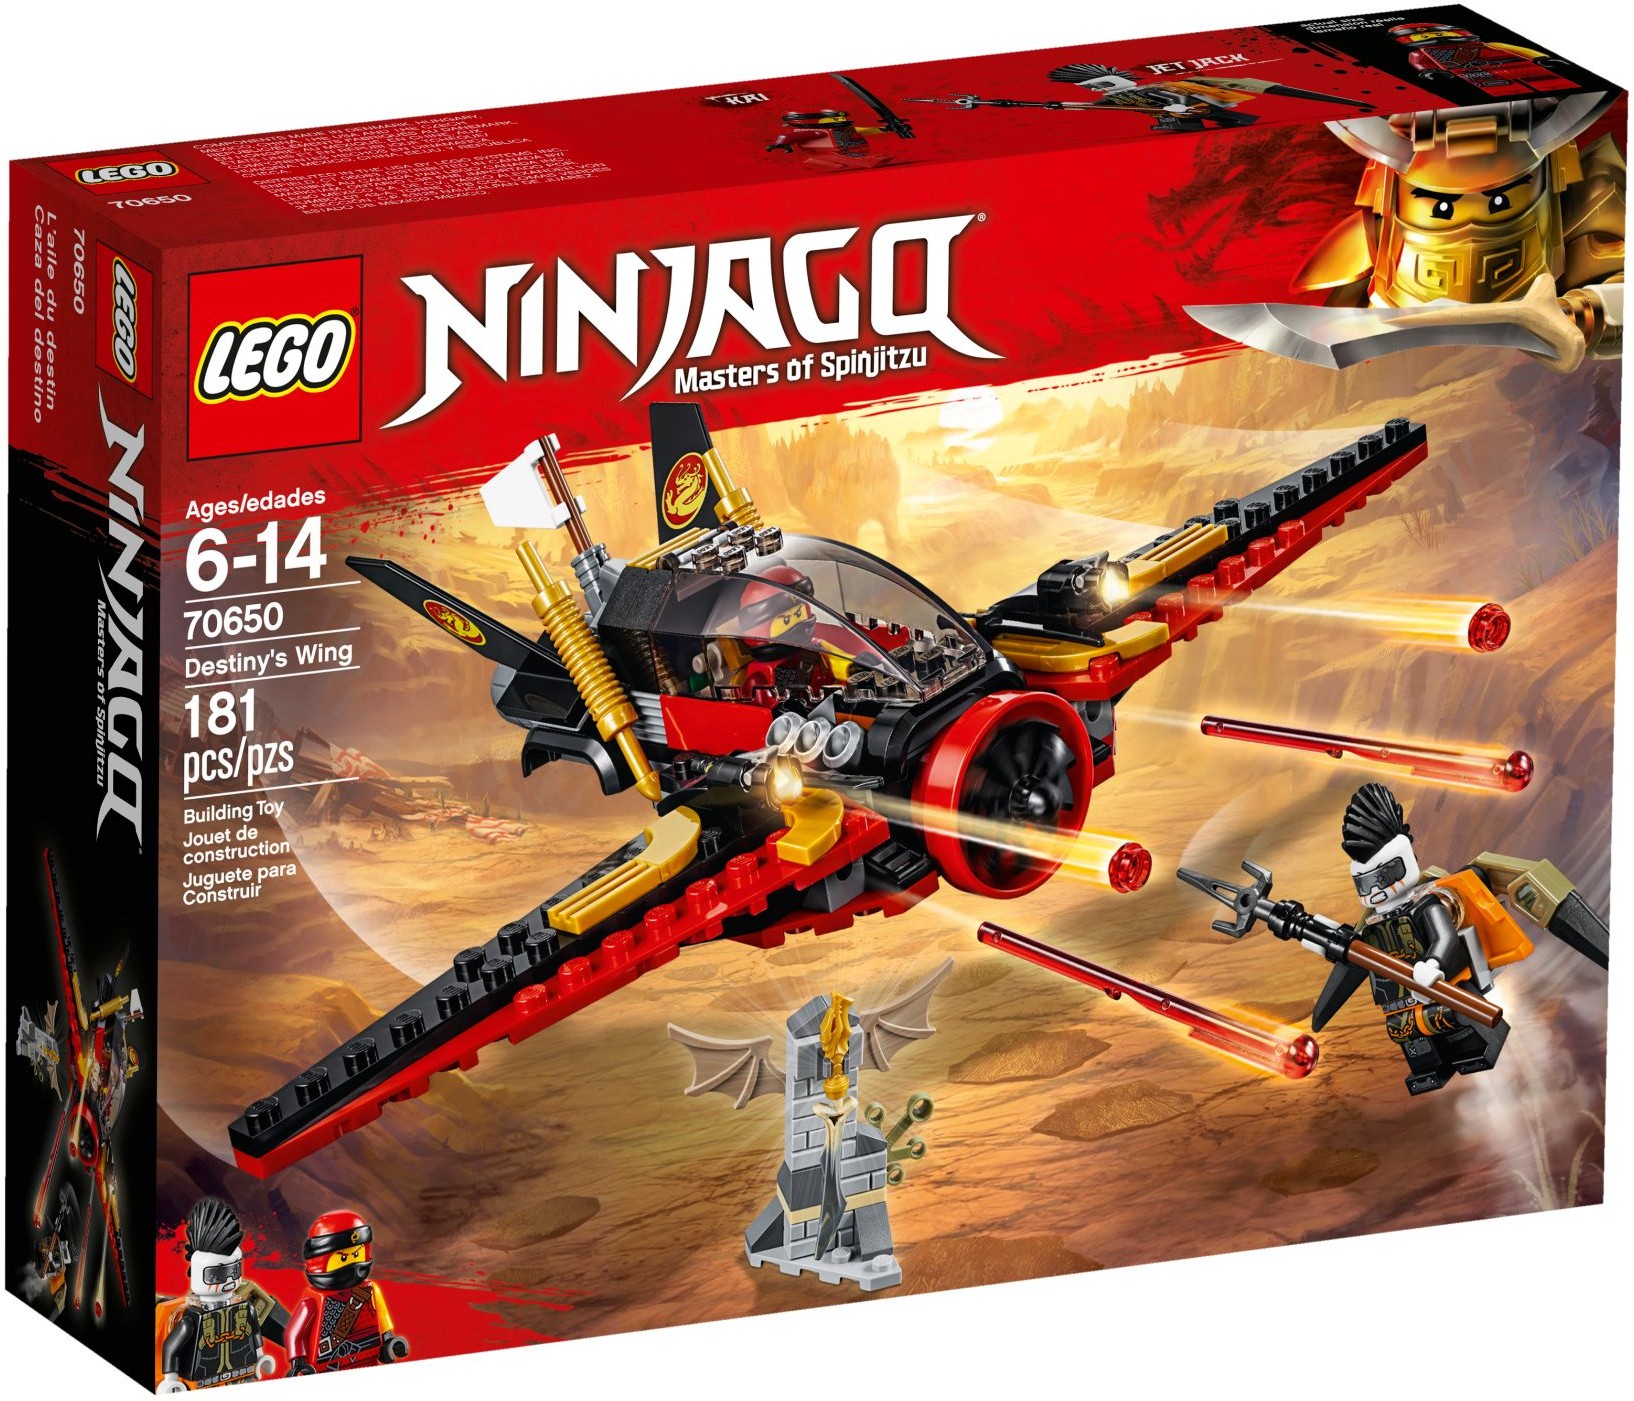 70650 Destiny's Wing - Lego Ninjago set best price